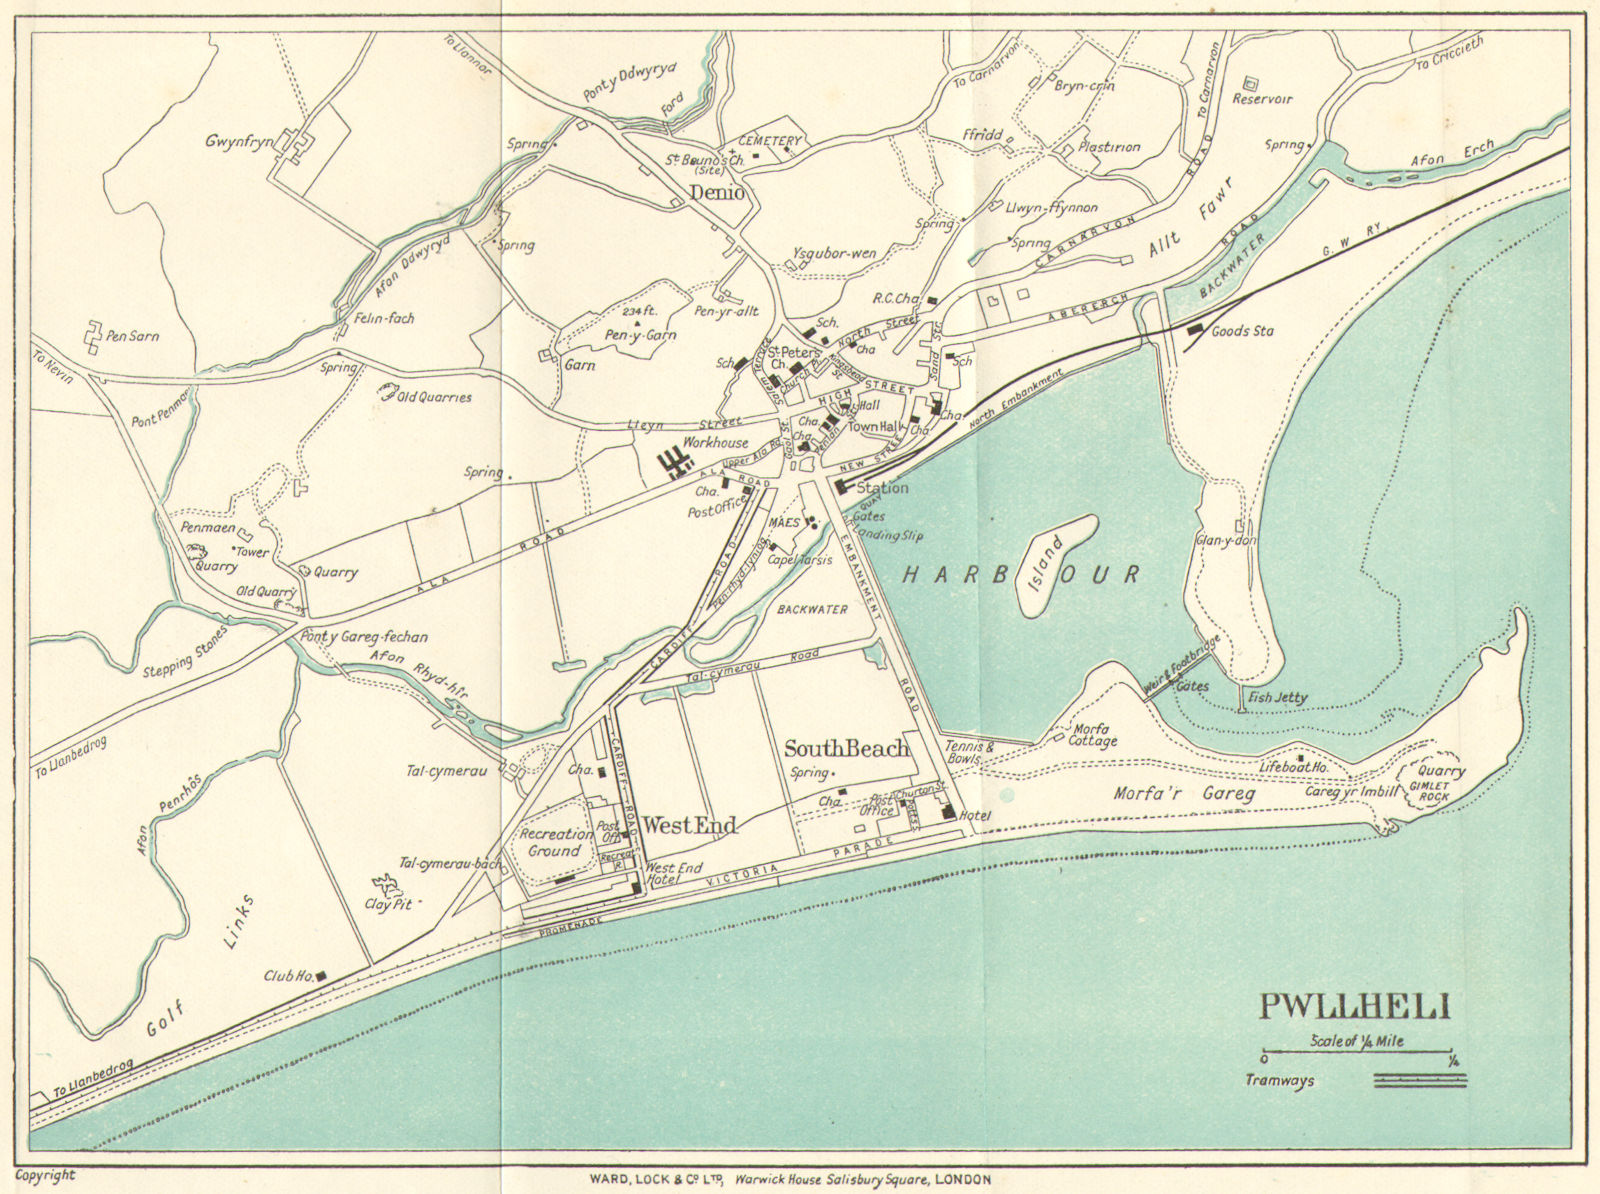 Associate Product PWLLHELI vintage town/city plan. Wales. WARD LOCK c1928 old vintage map chart